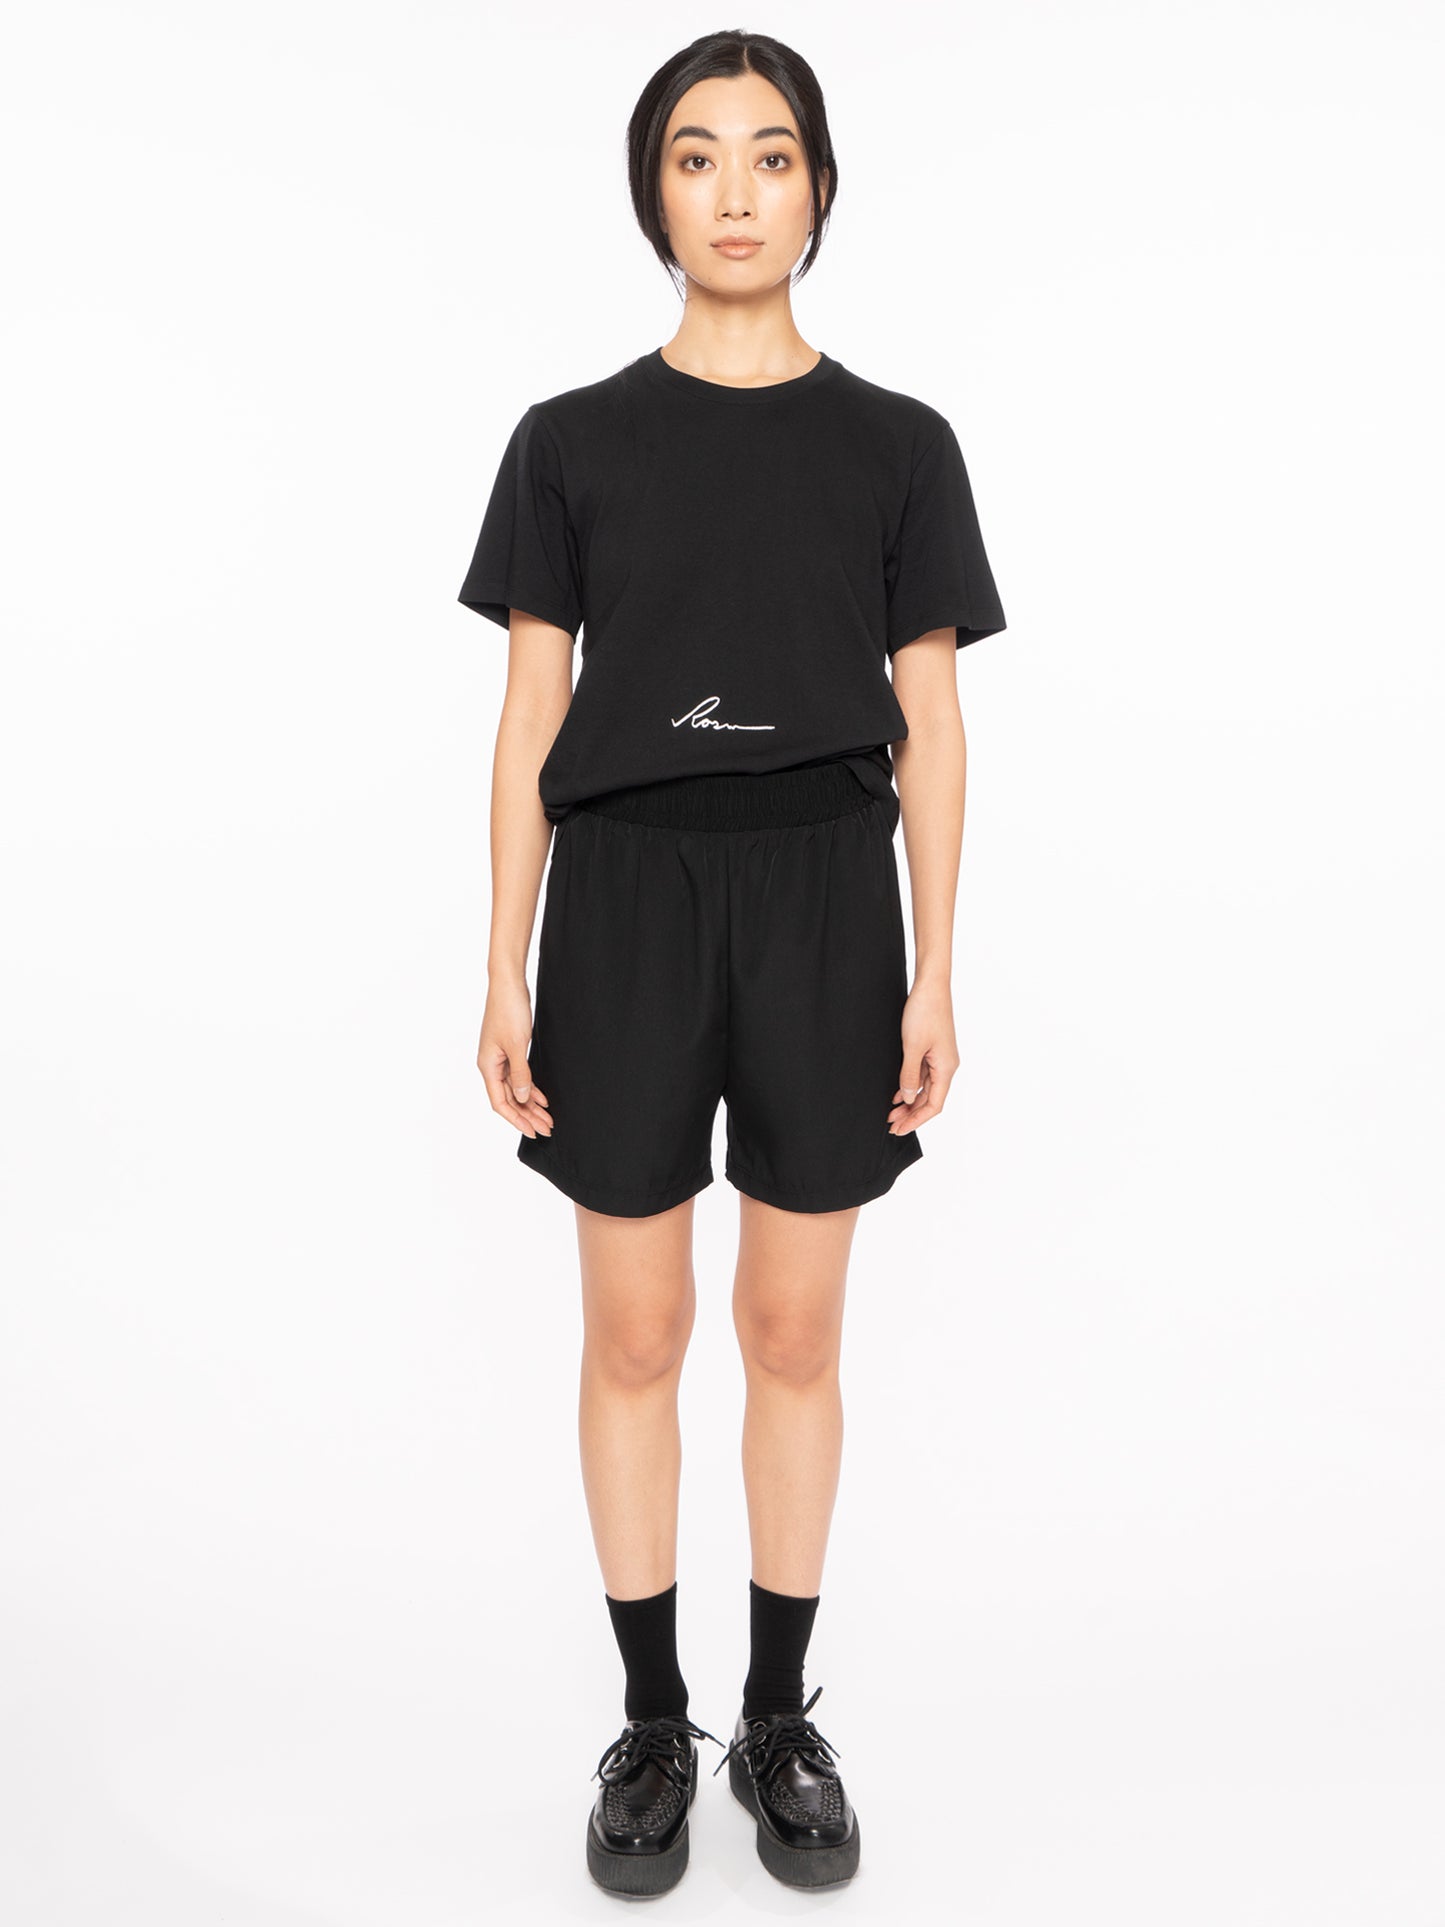 rosin studios black silky satin basketball short elastic waistband pockets